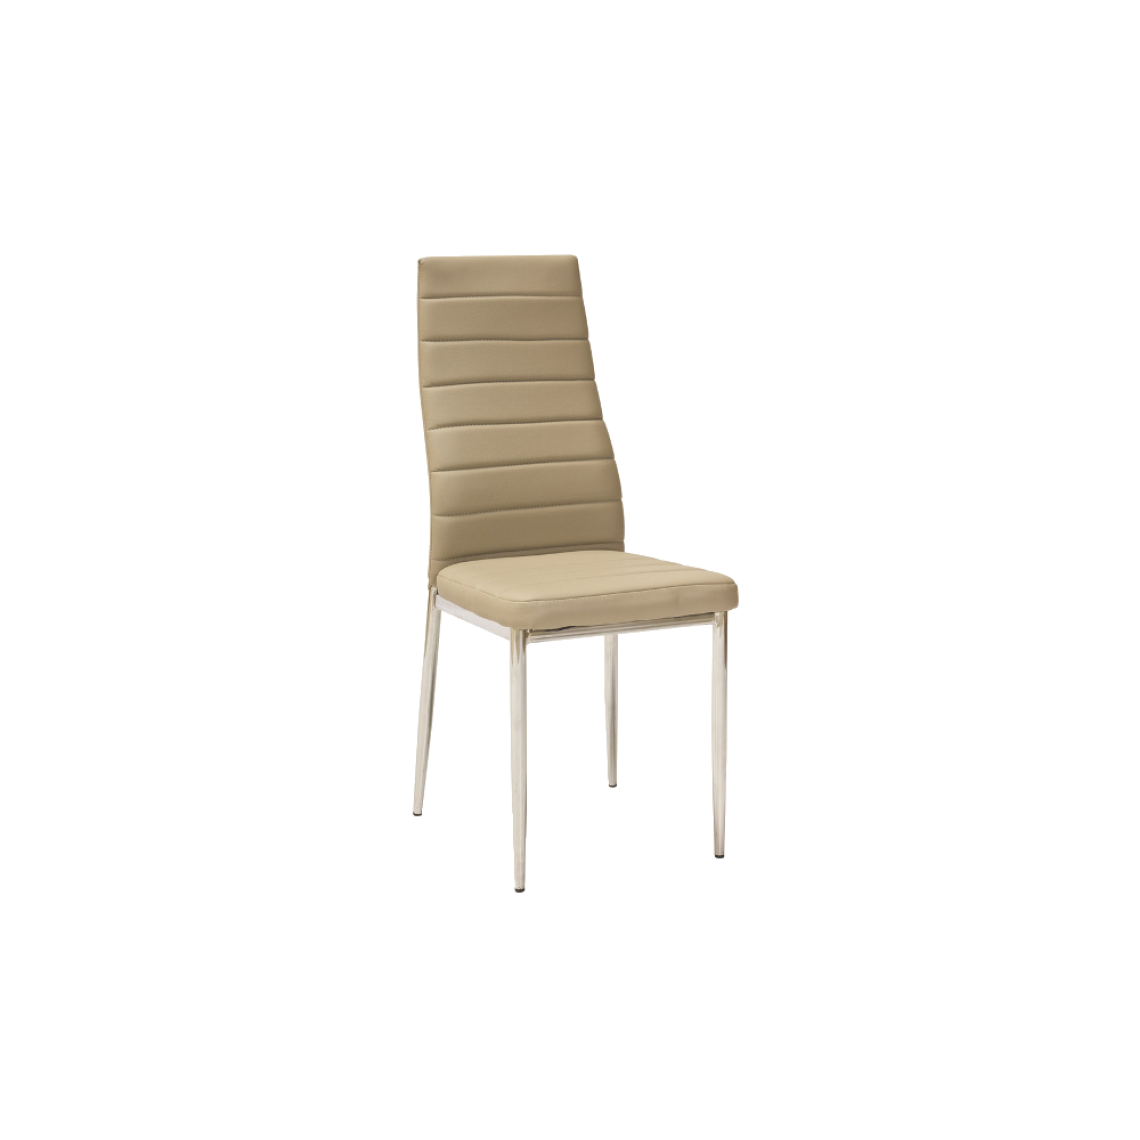 Ac-Deco - Chaise moderne - H261 - 40 x 38 x 96 cm - Cadre chromé - Taupe - Chaises